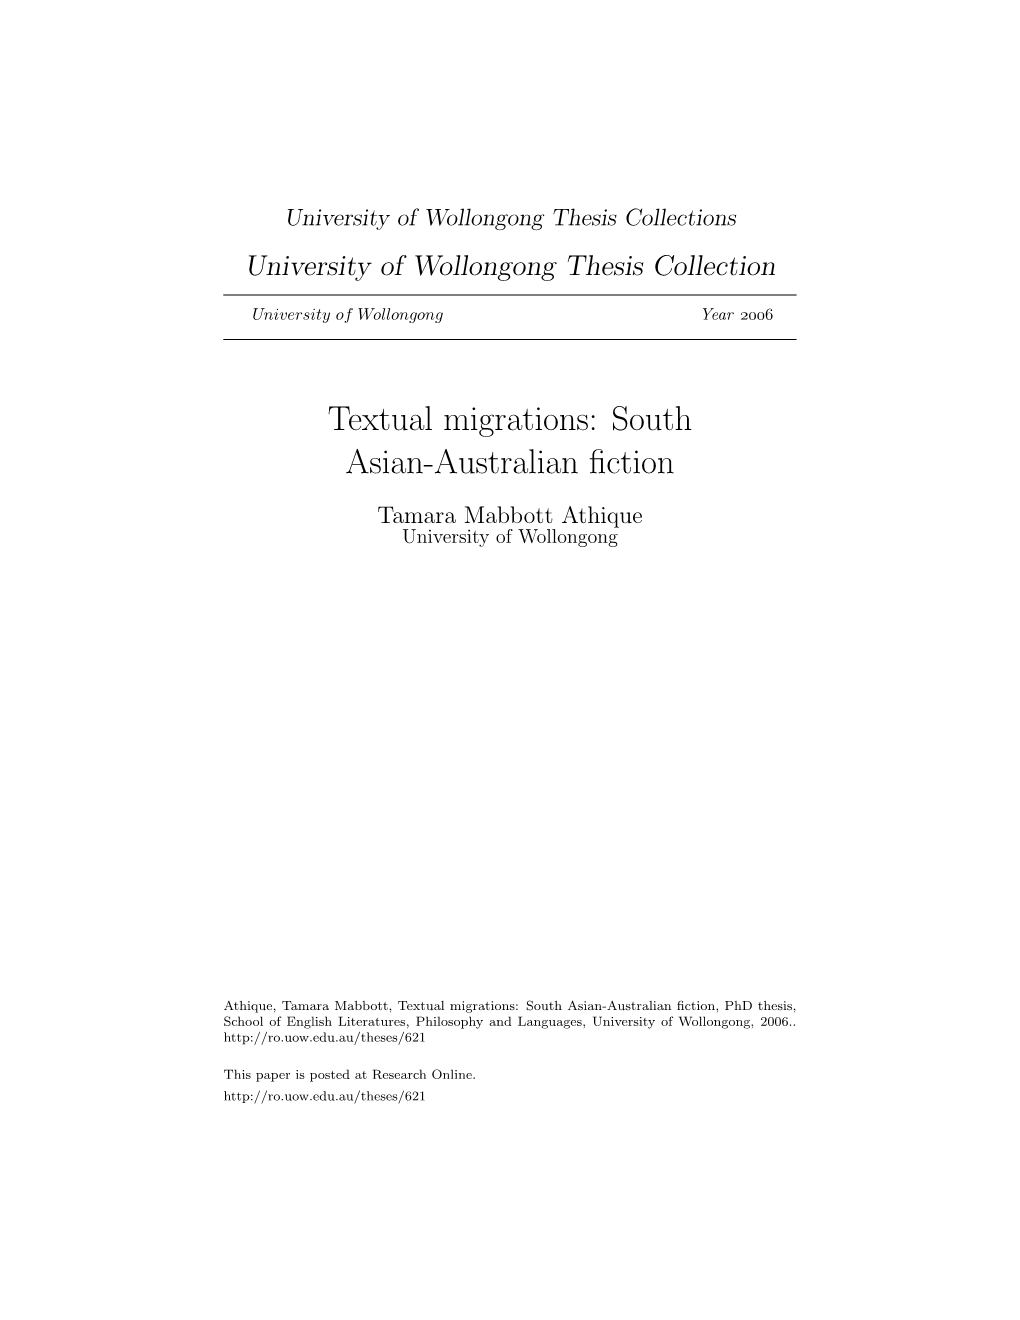 Textual Migrations: South Asian-Australian Fiction